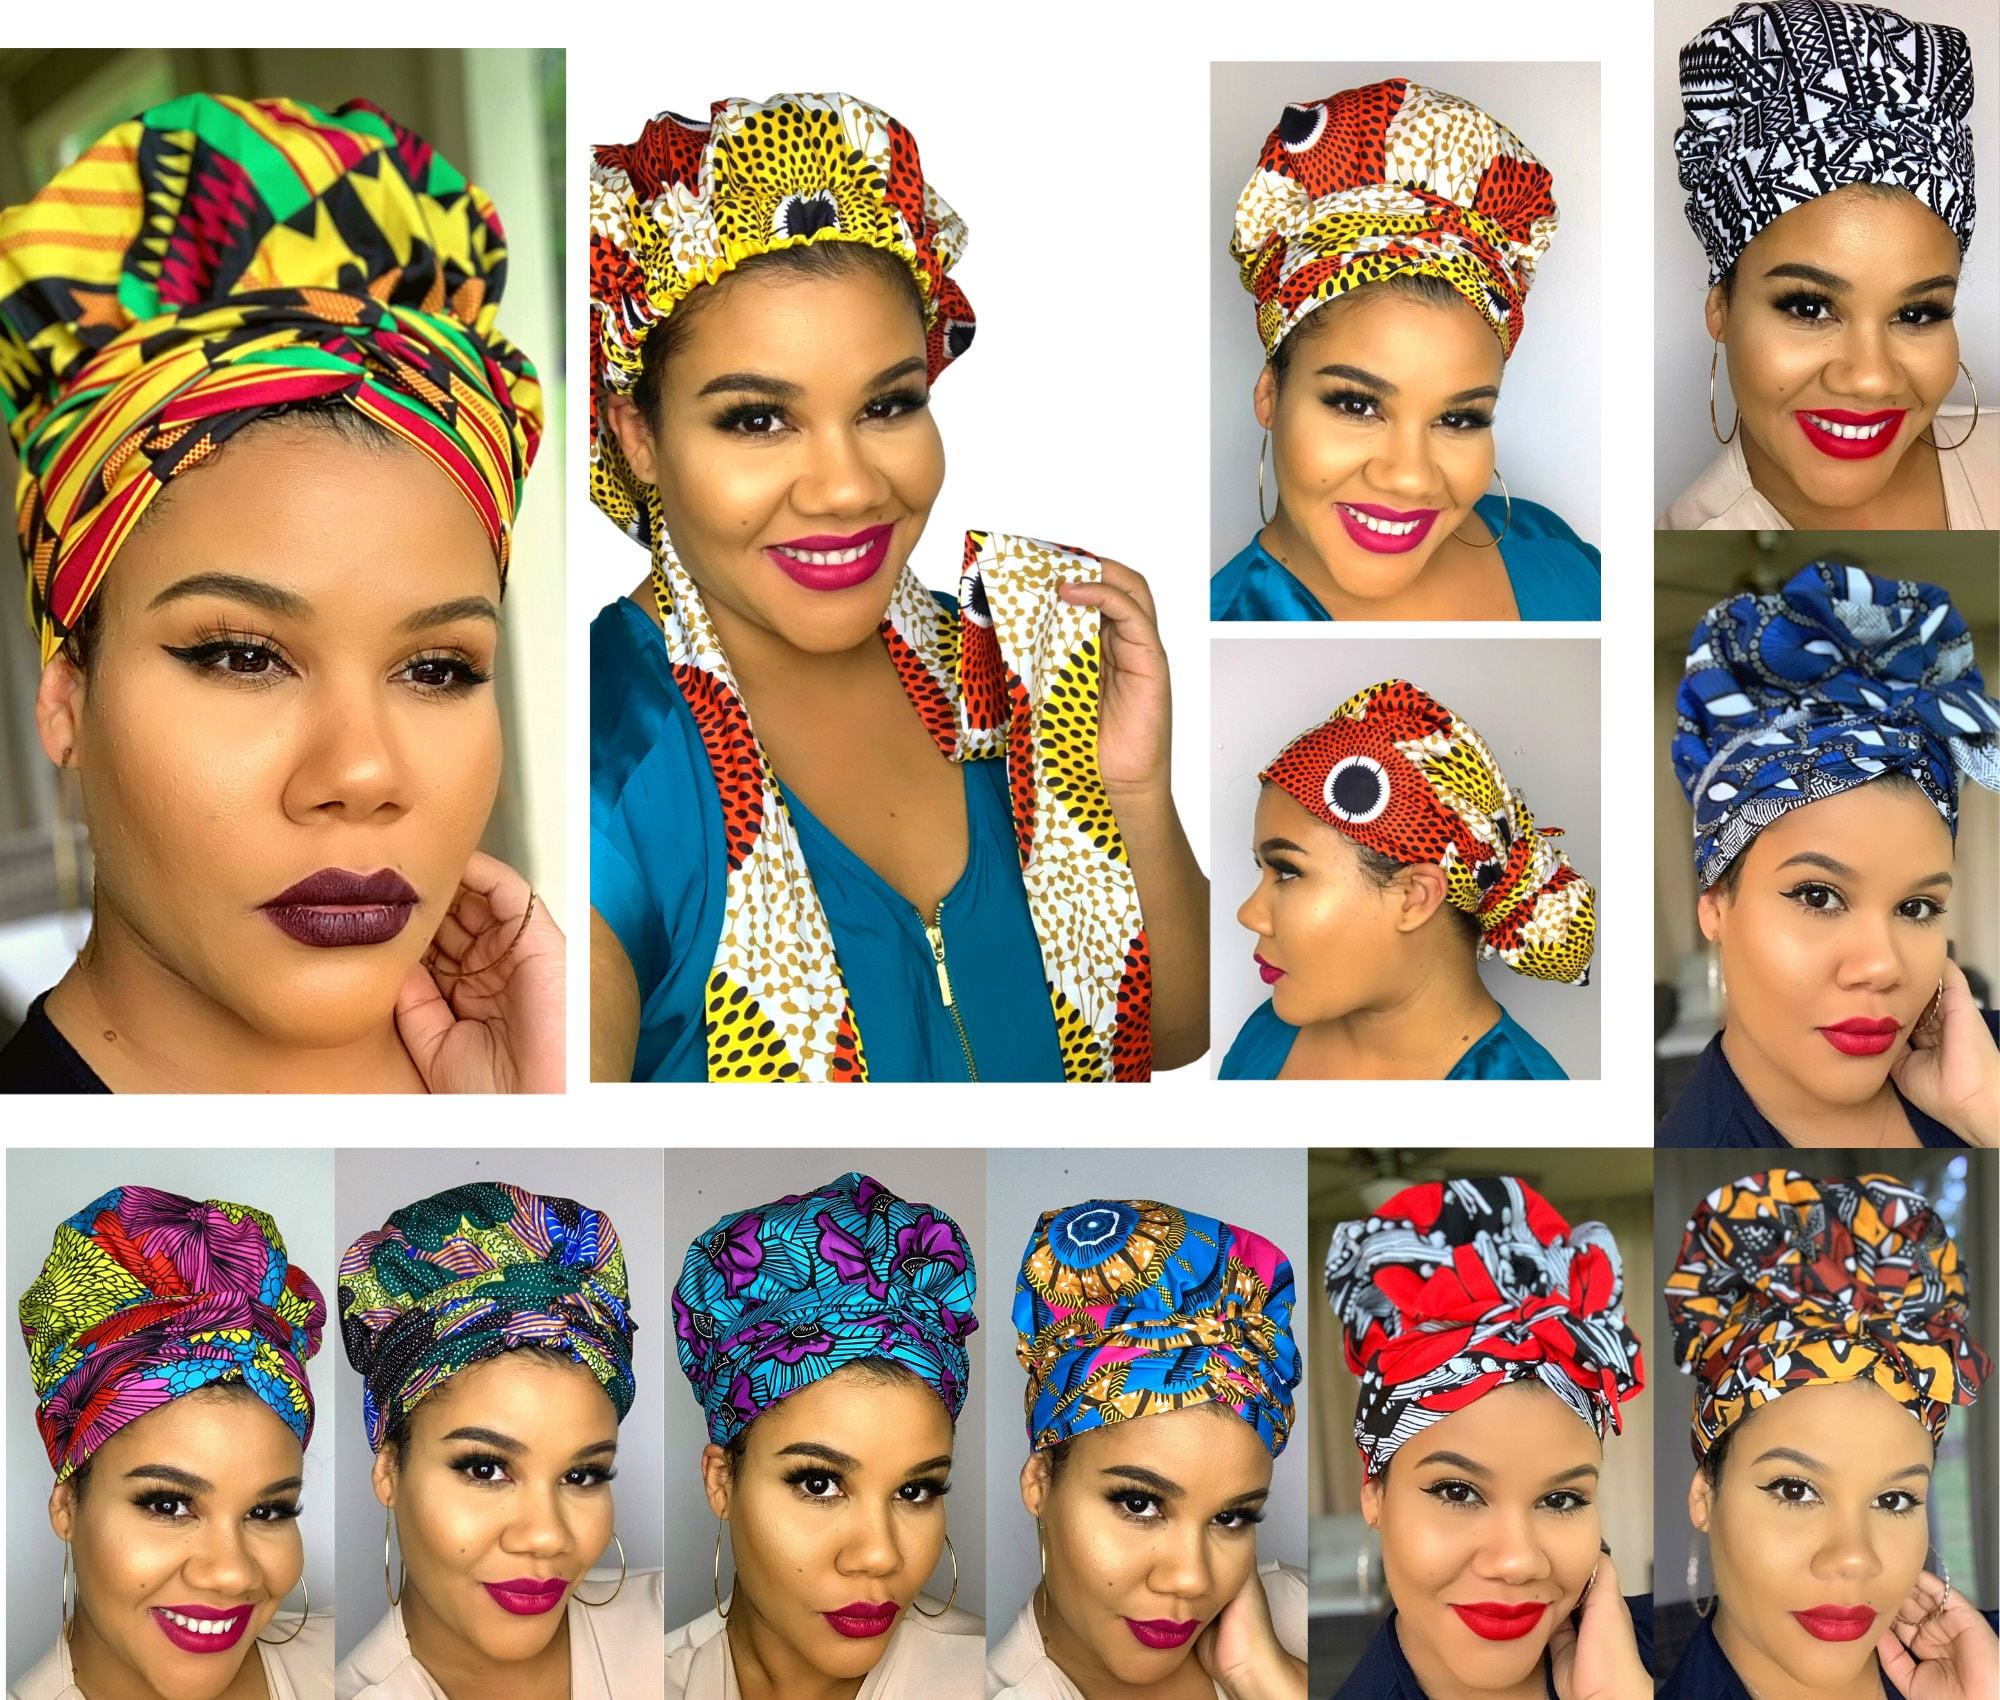 Satin-Lined Women's Turbans & Head Wraps Under $30